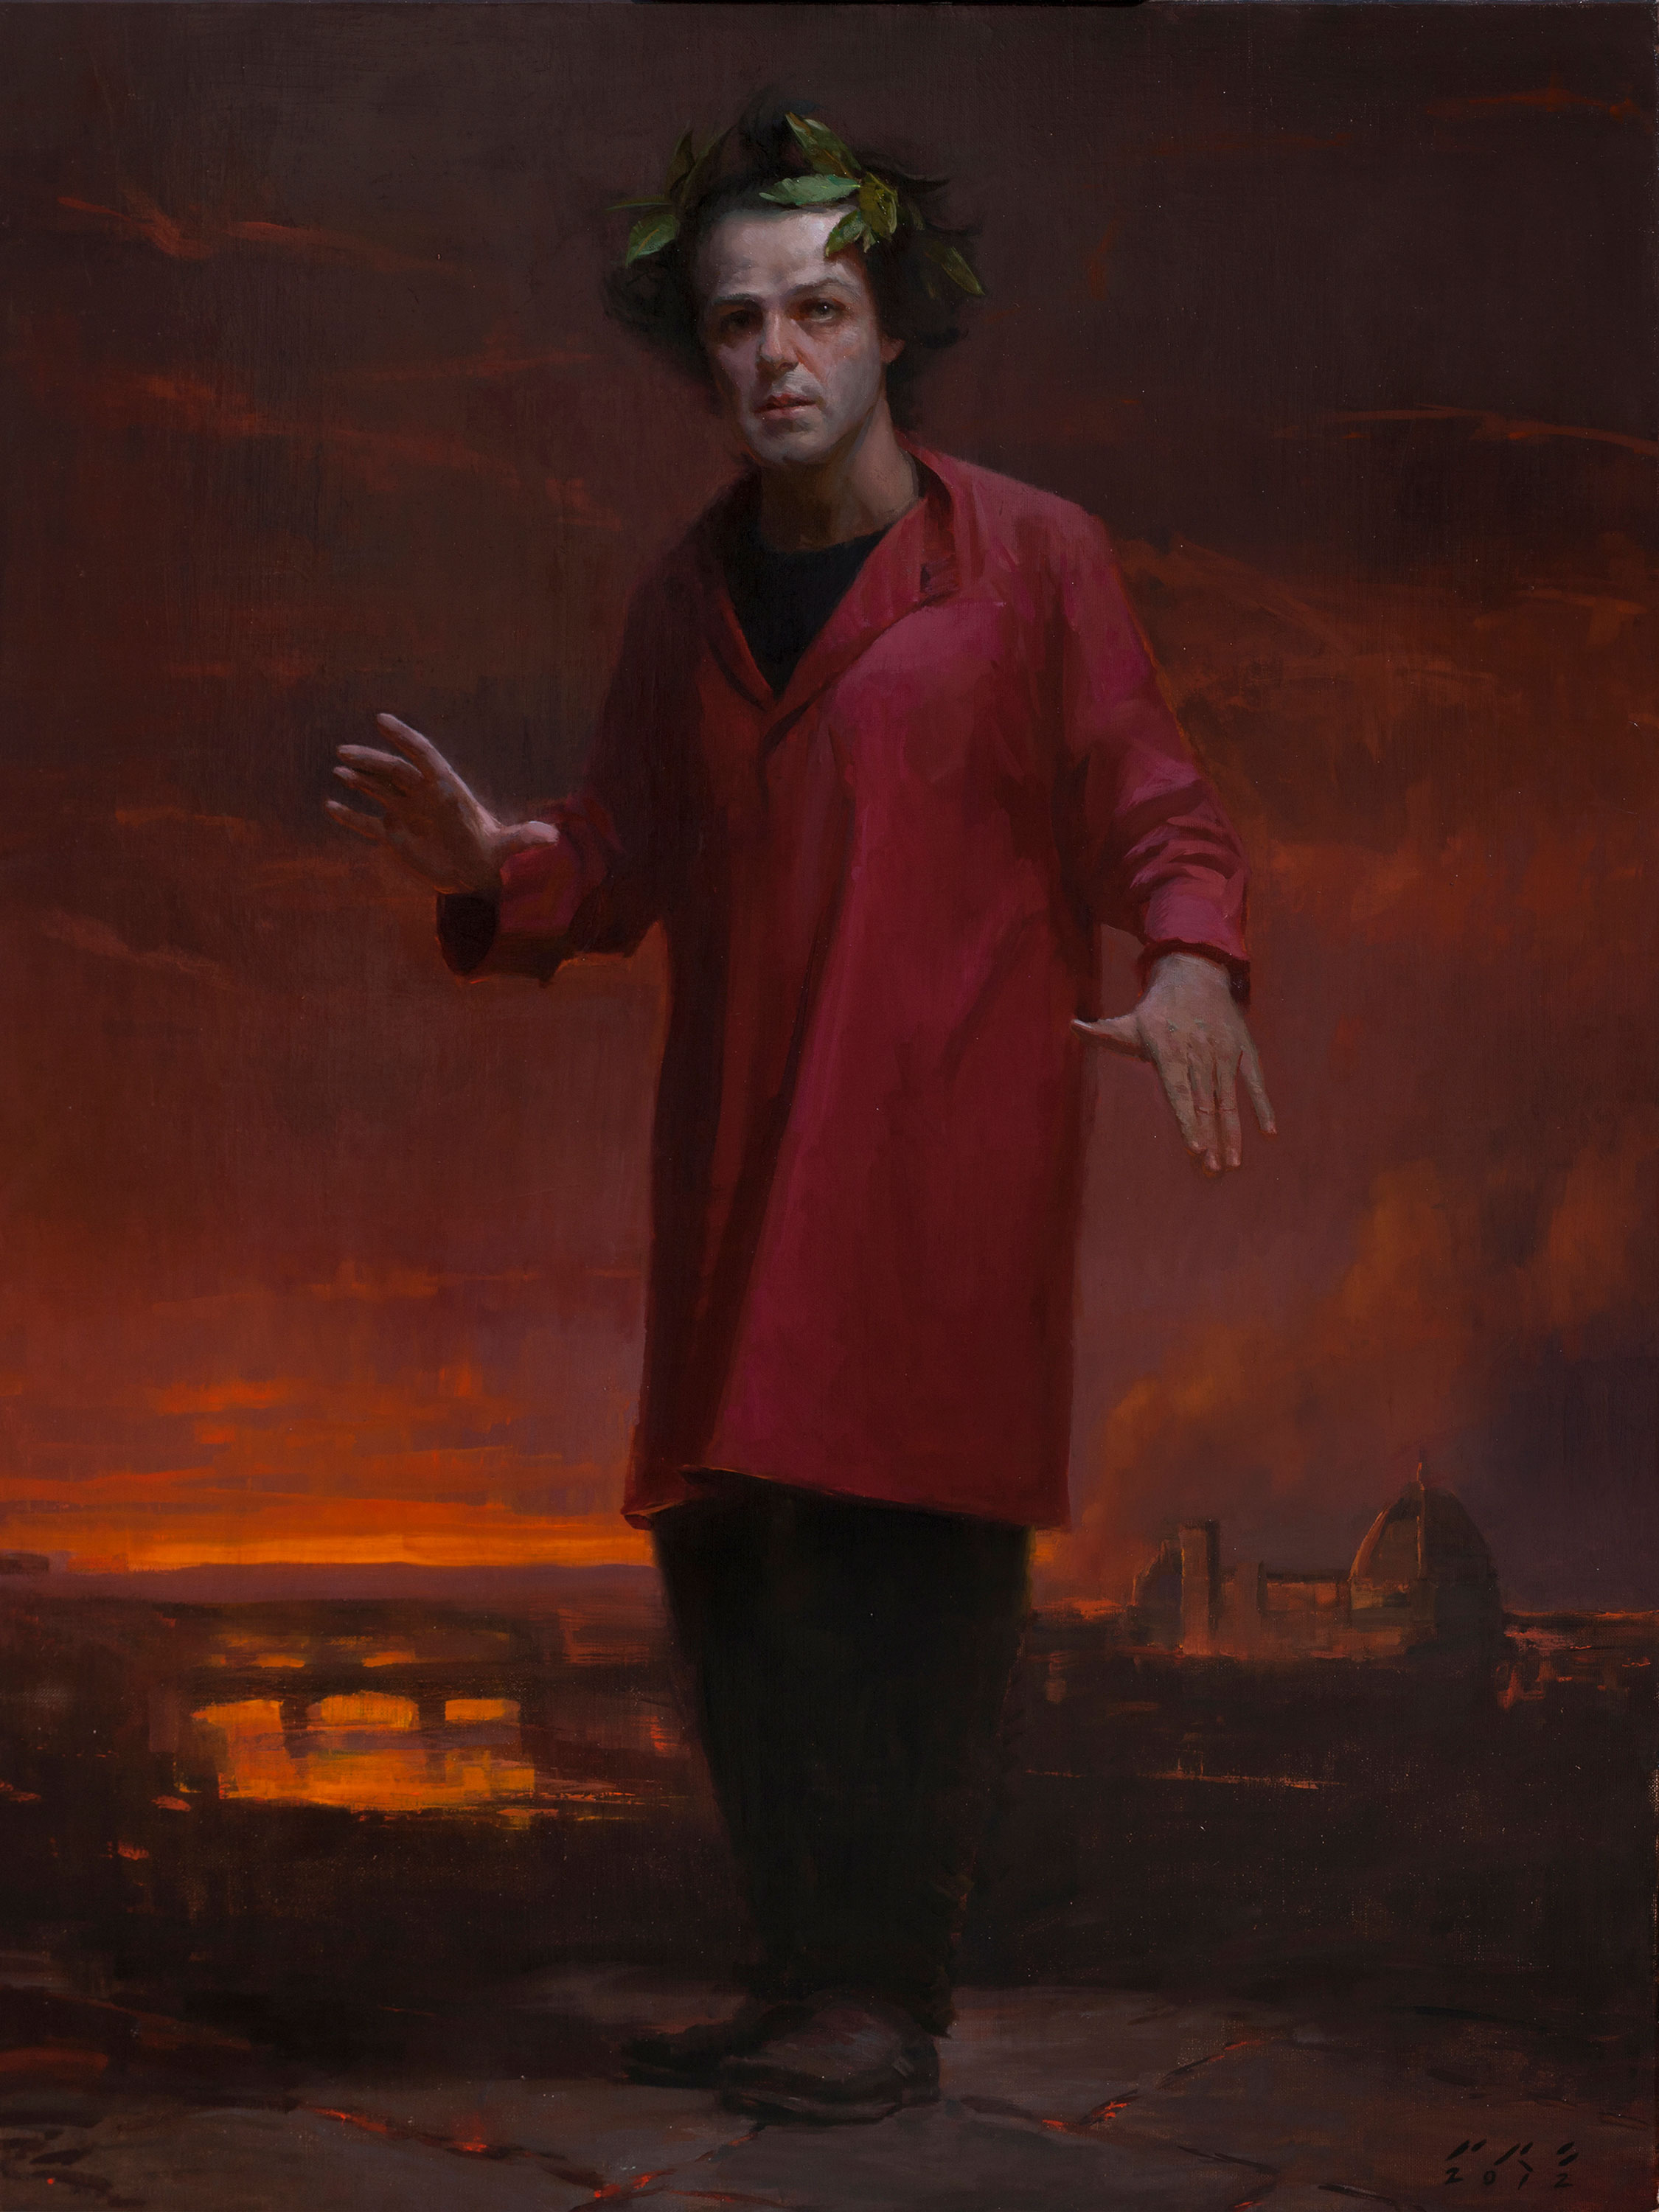 Tony Pro self-portrait painting